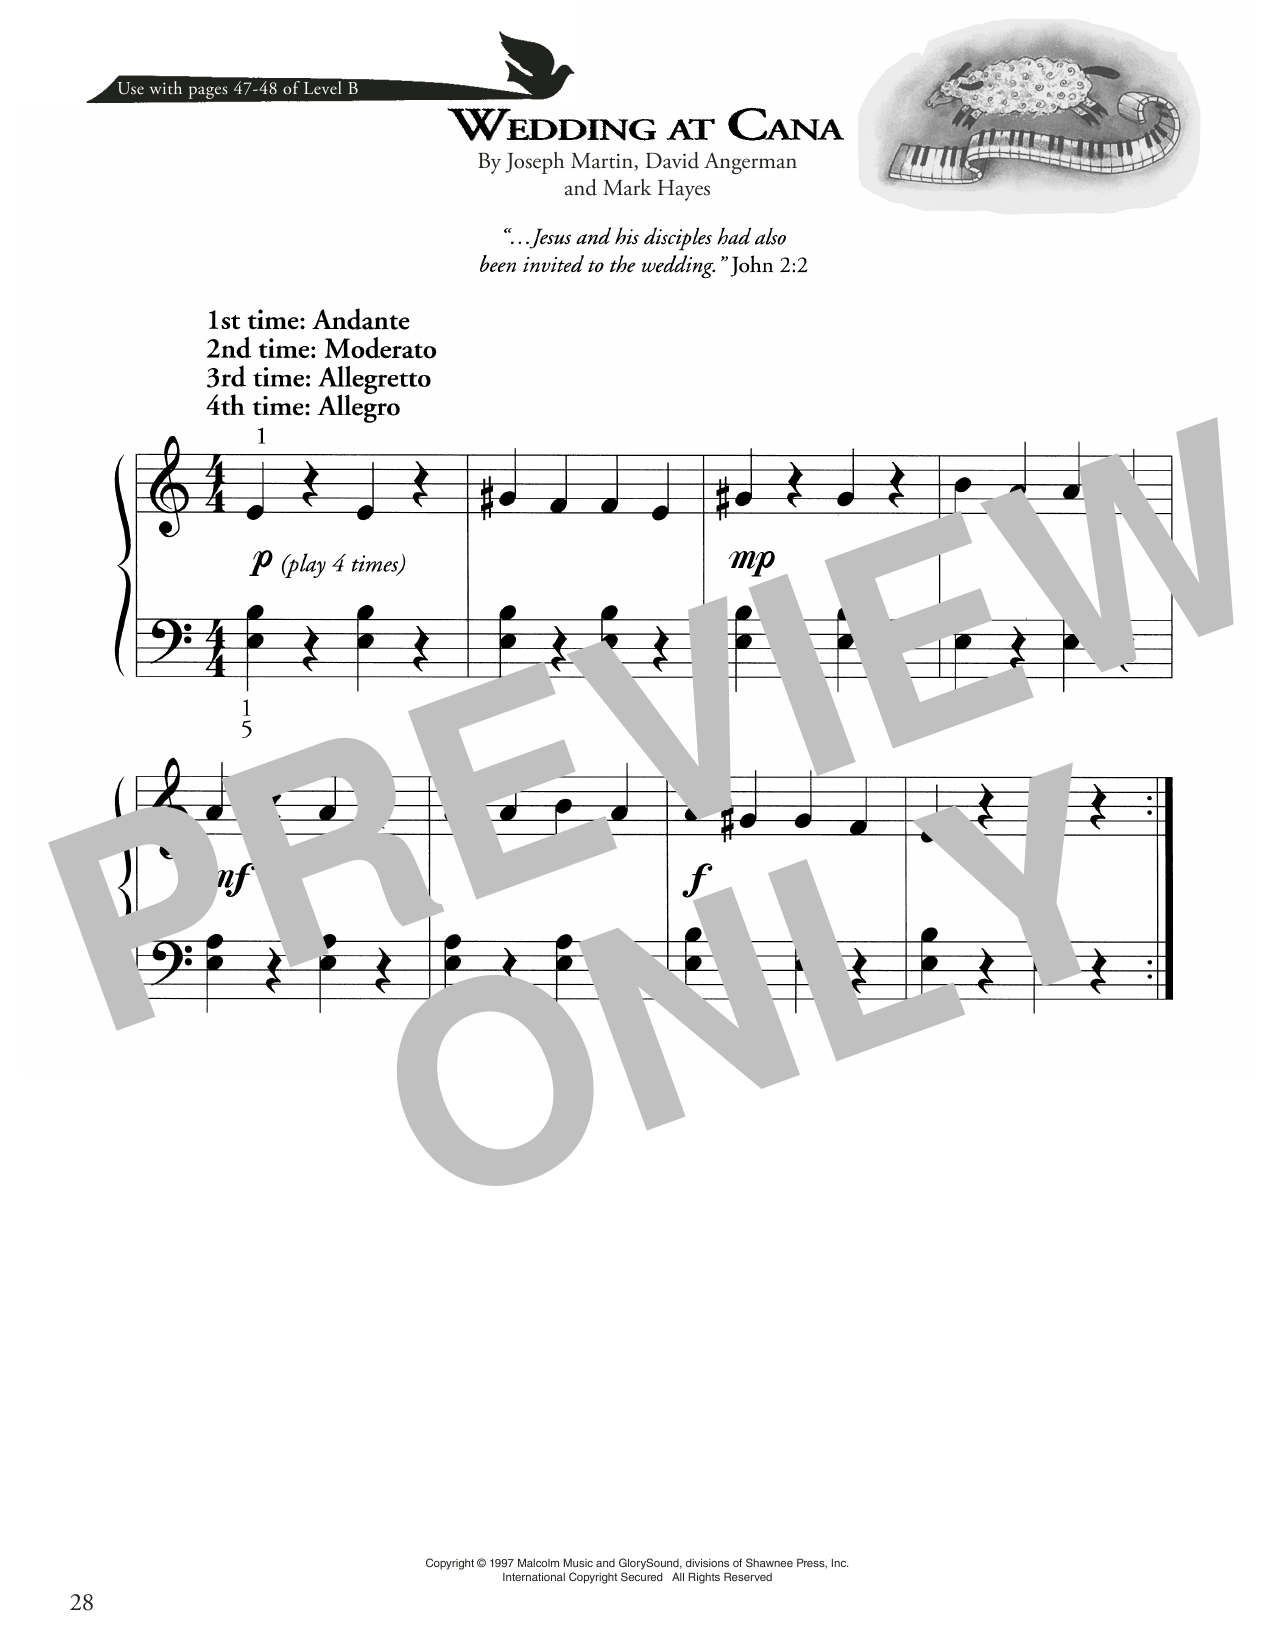 Joseph Martin, David Angerman and Mark Hayes Wedding At Cana Sheet Music Notes & Chords for Piano Method - Download or Print PDF